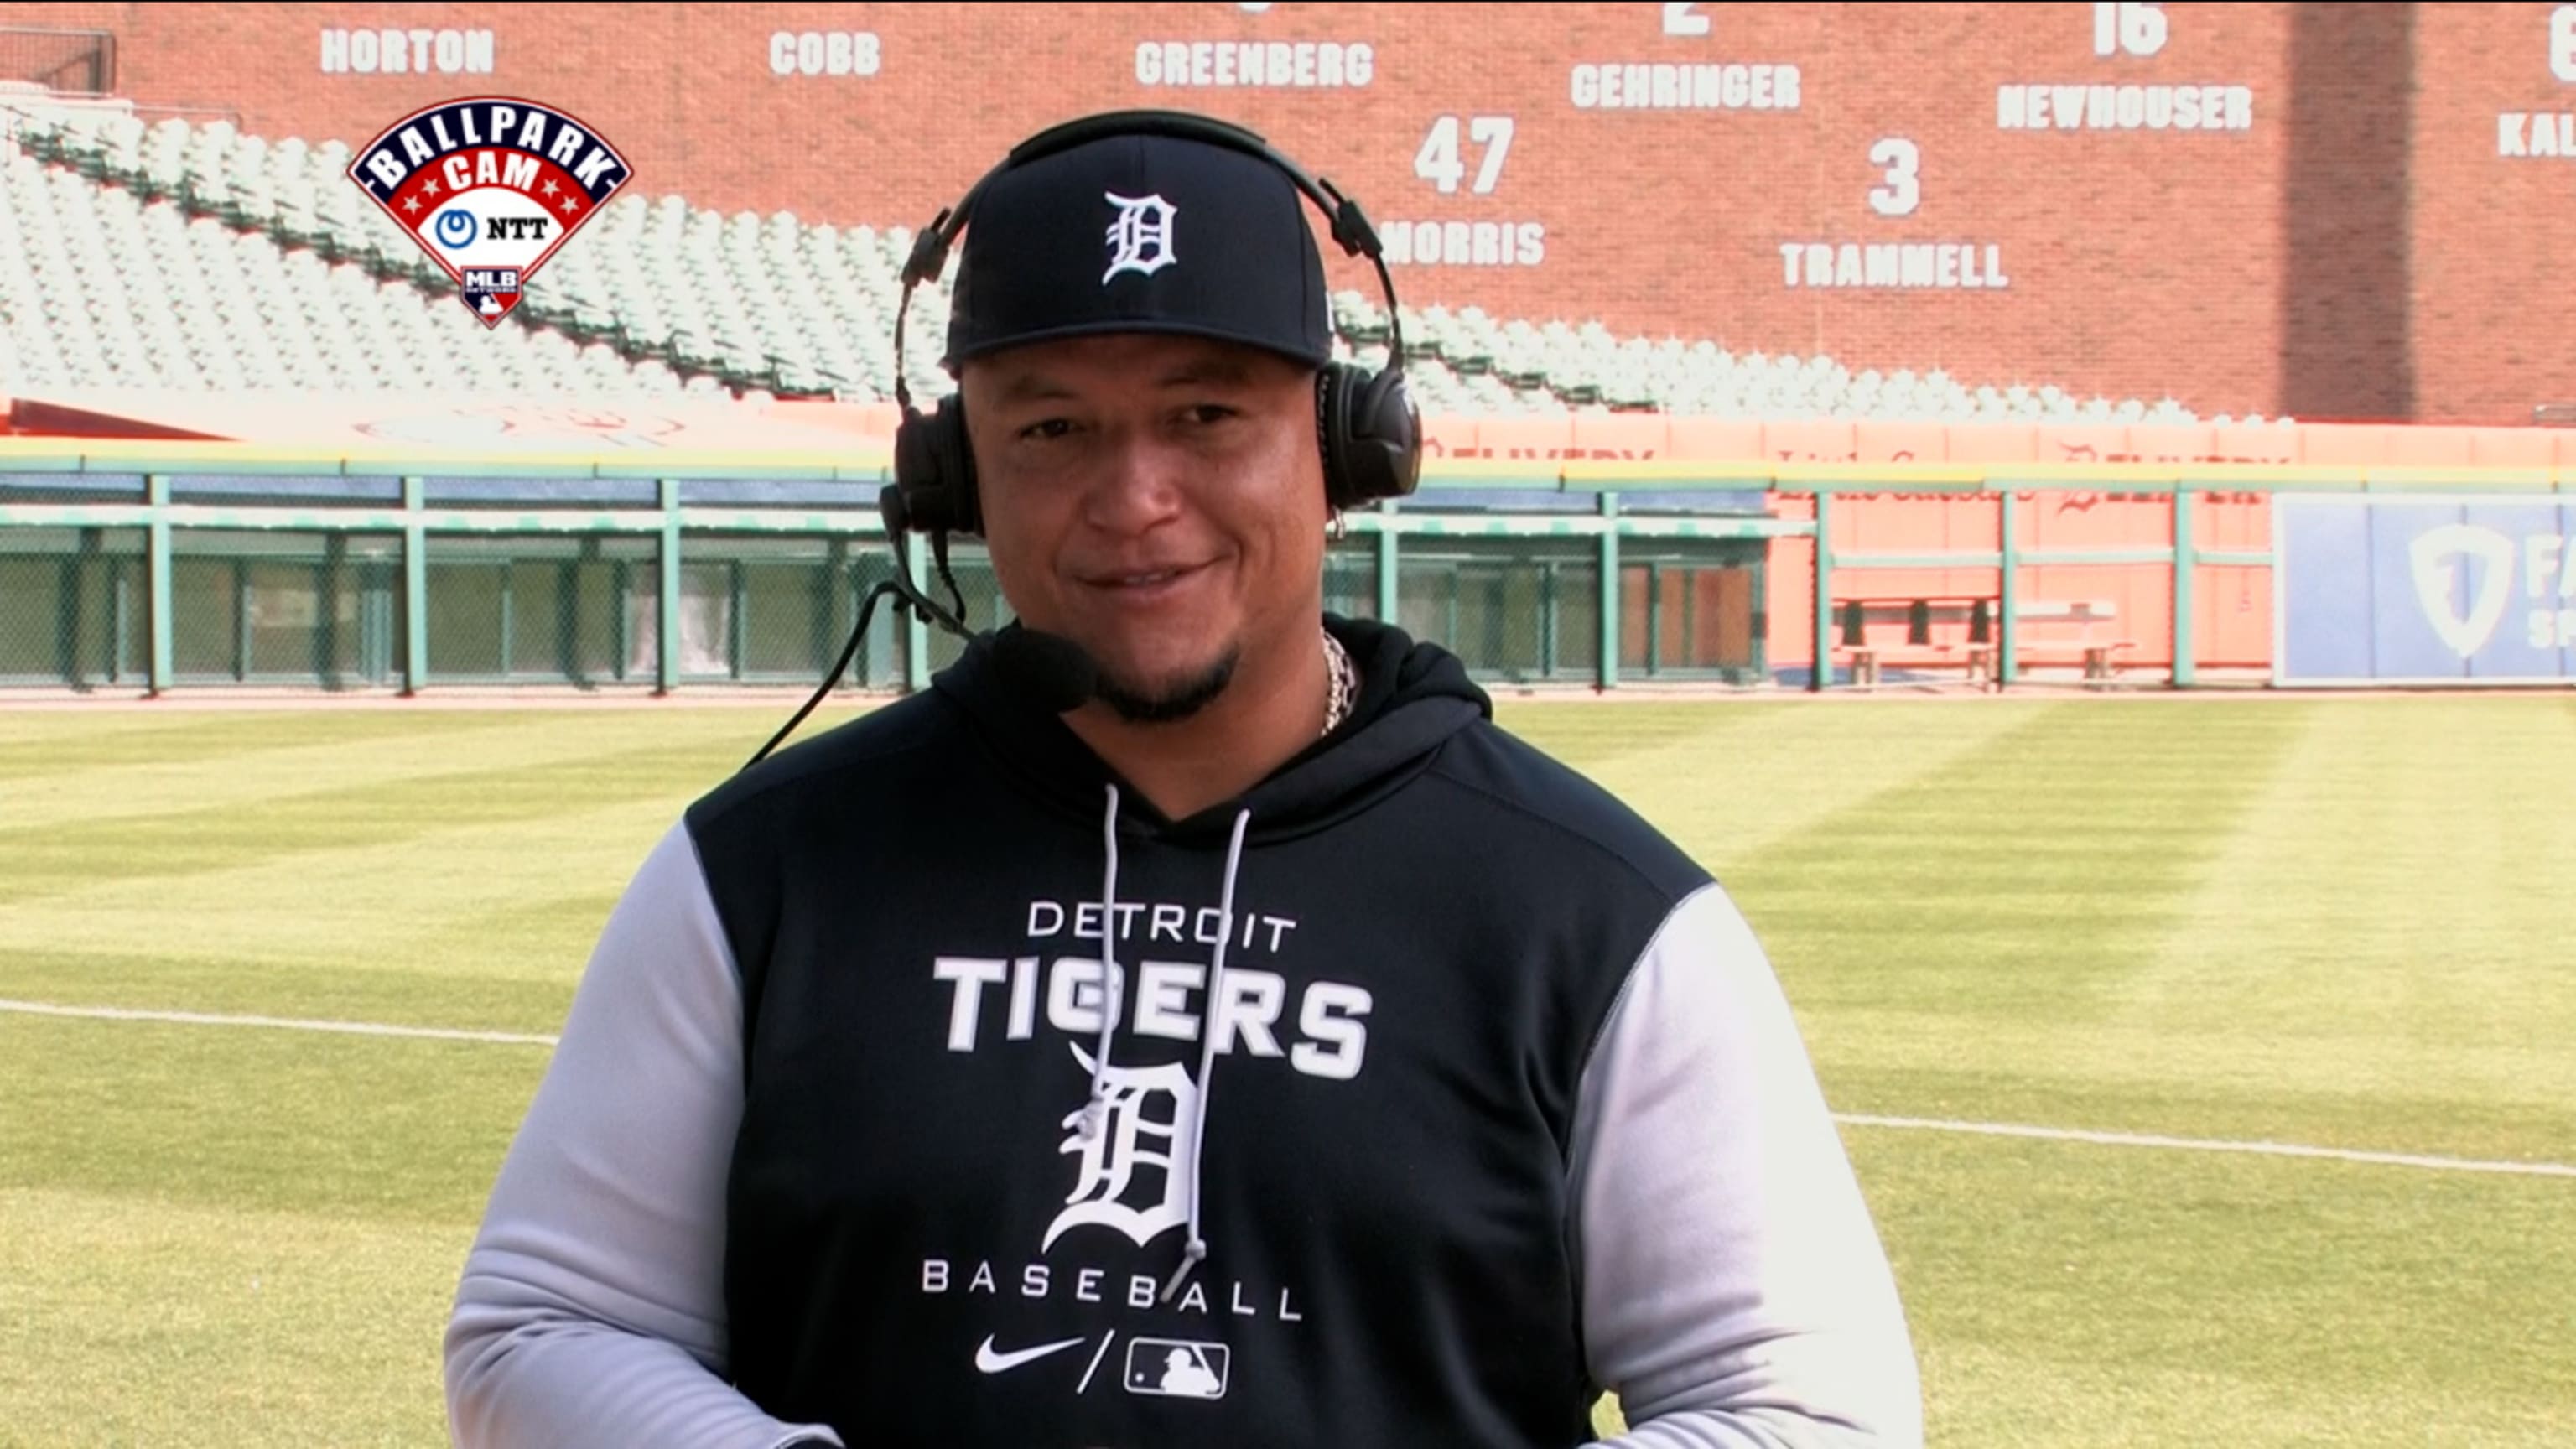 Miguel Cabrera Detroit Tigers Jersey – Classic Authentics